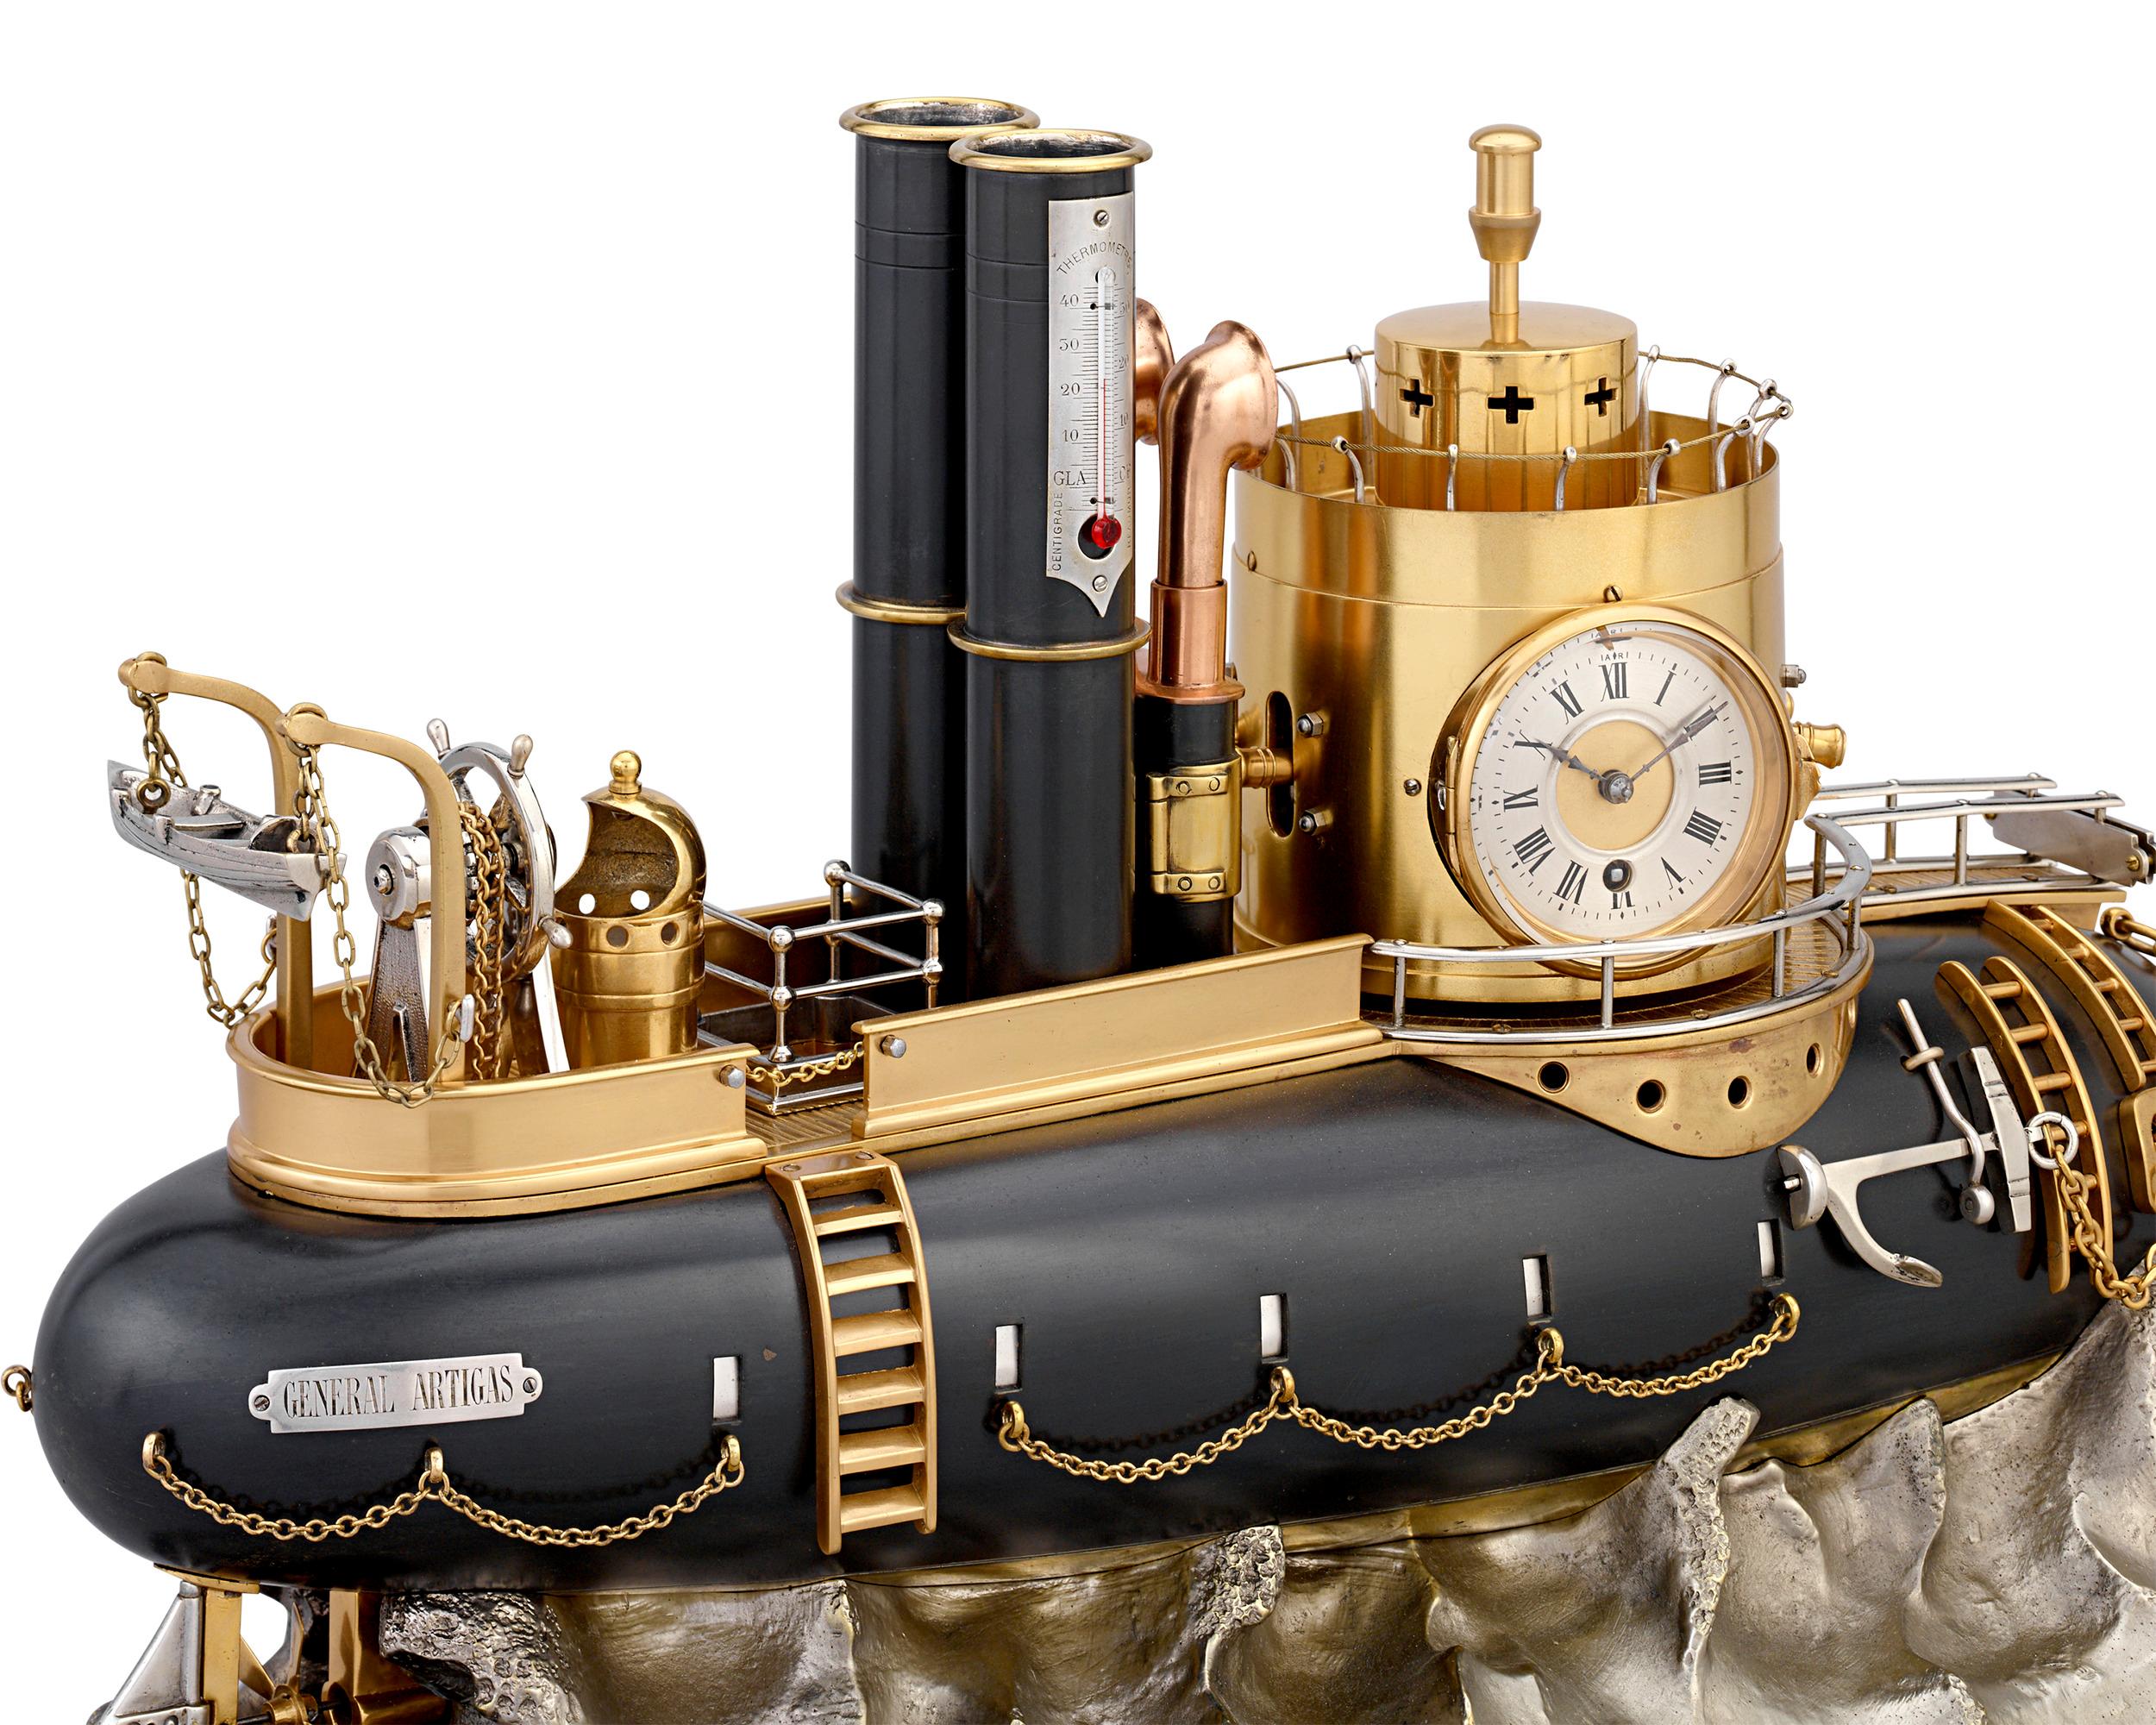 19th Century General Artigas Gunboat Industrial Clock